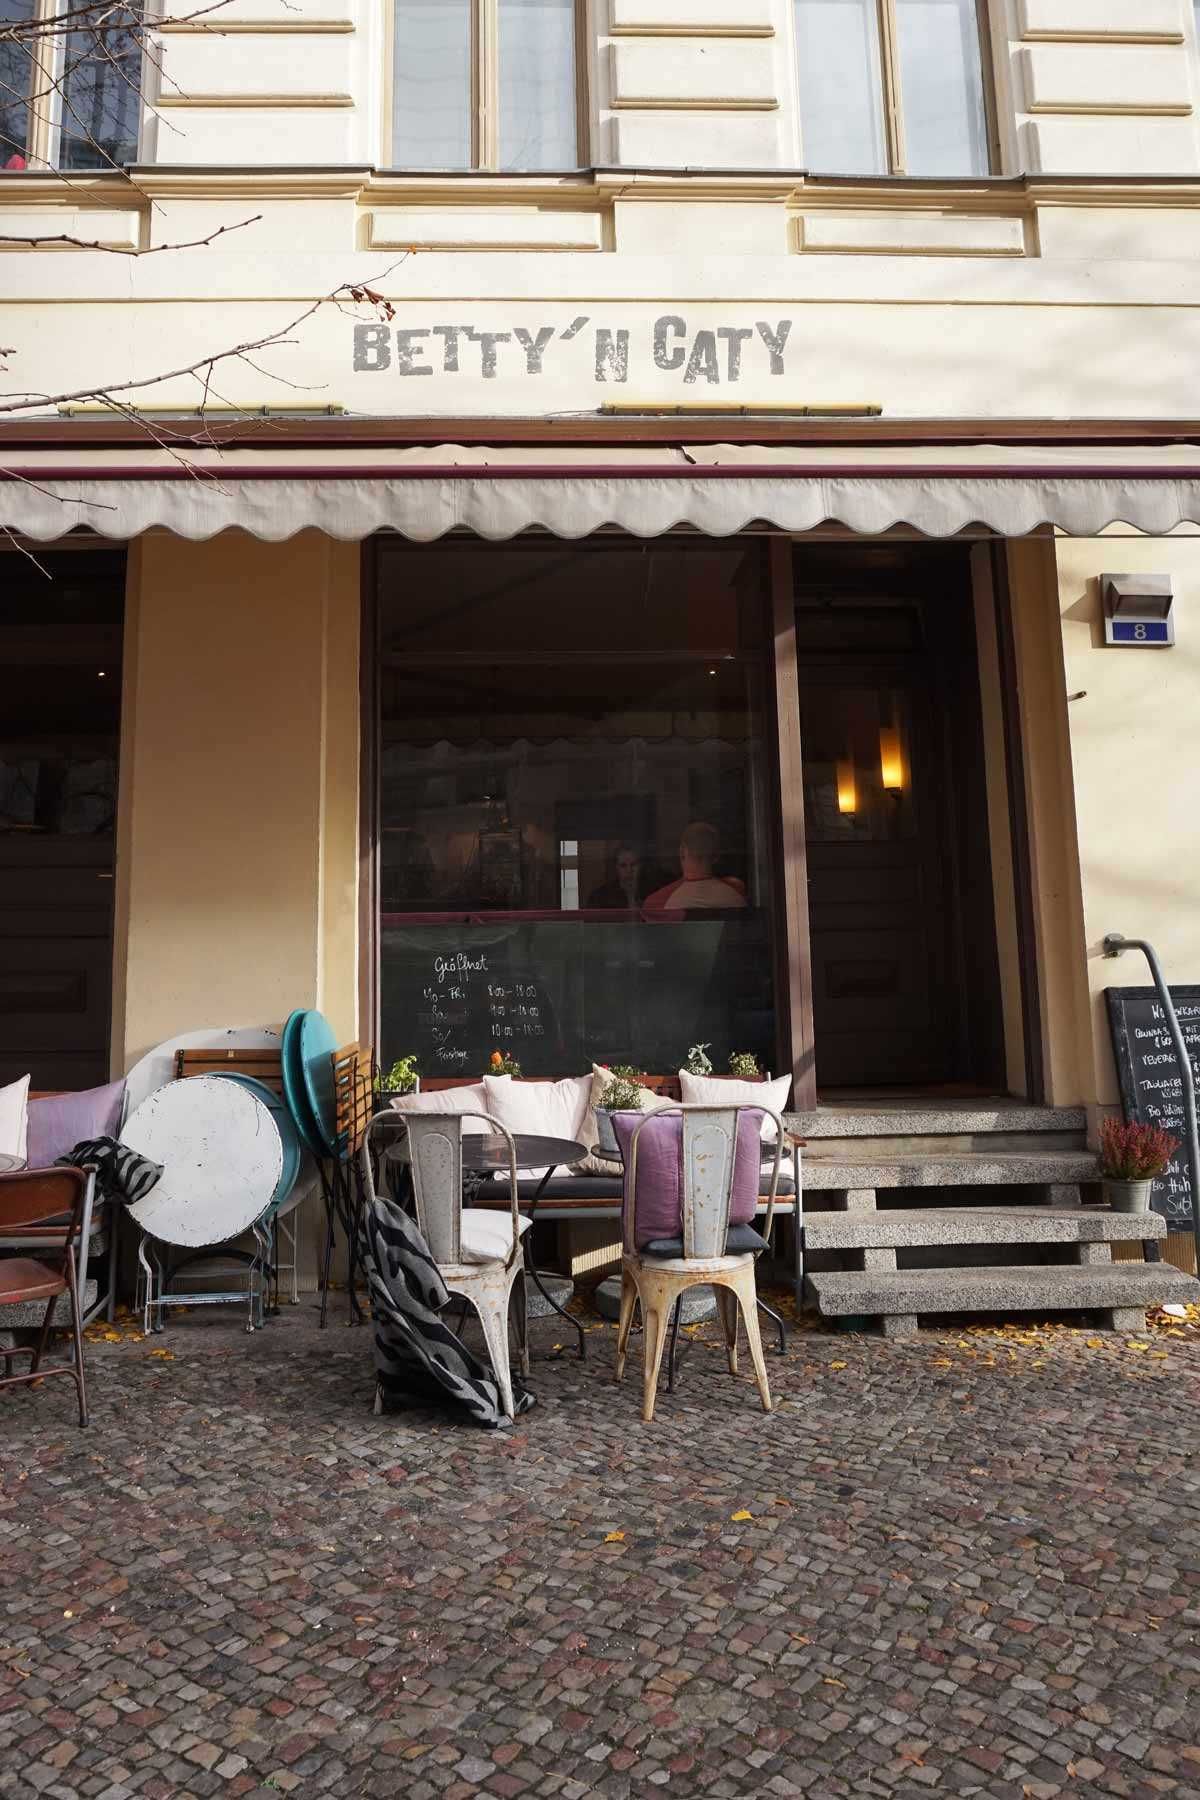 Betty’n Caty